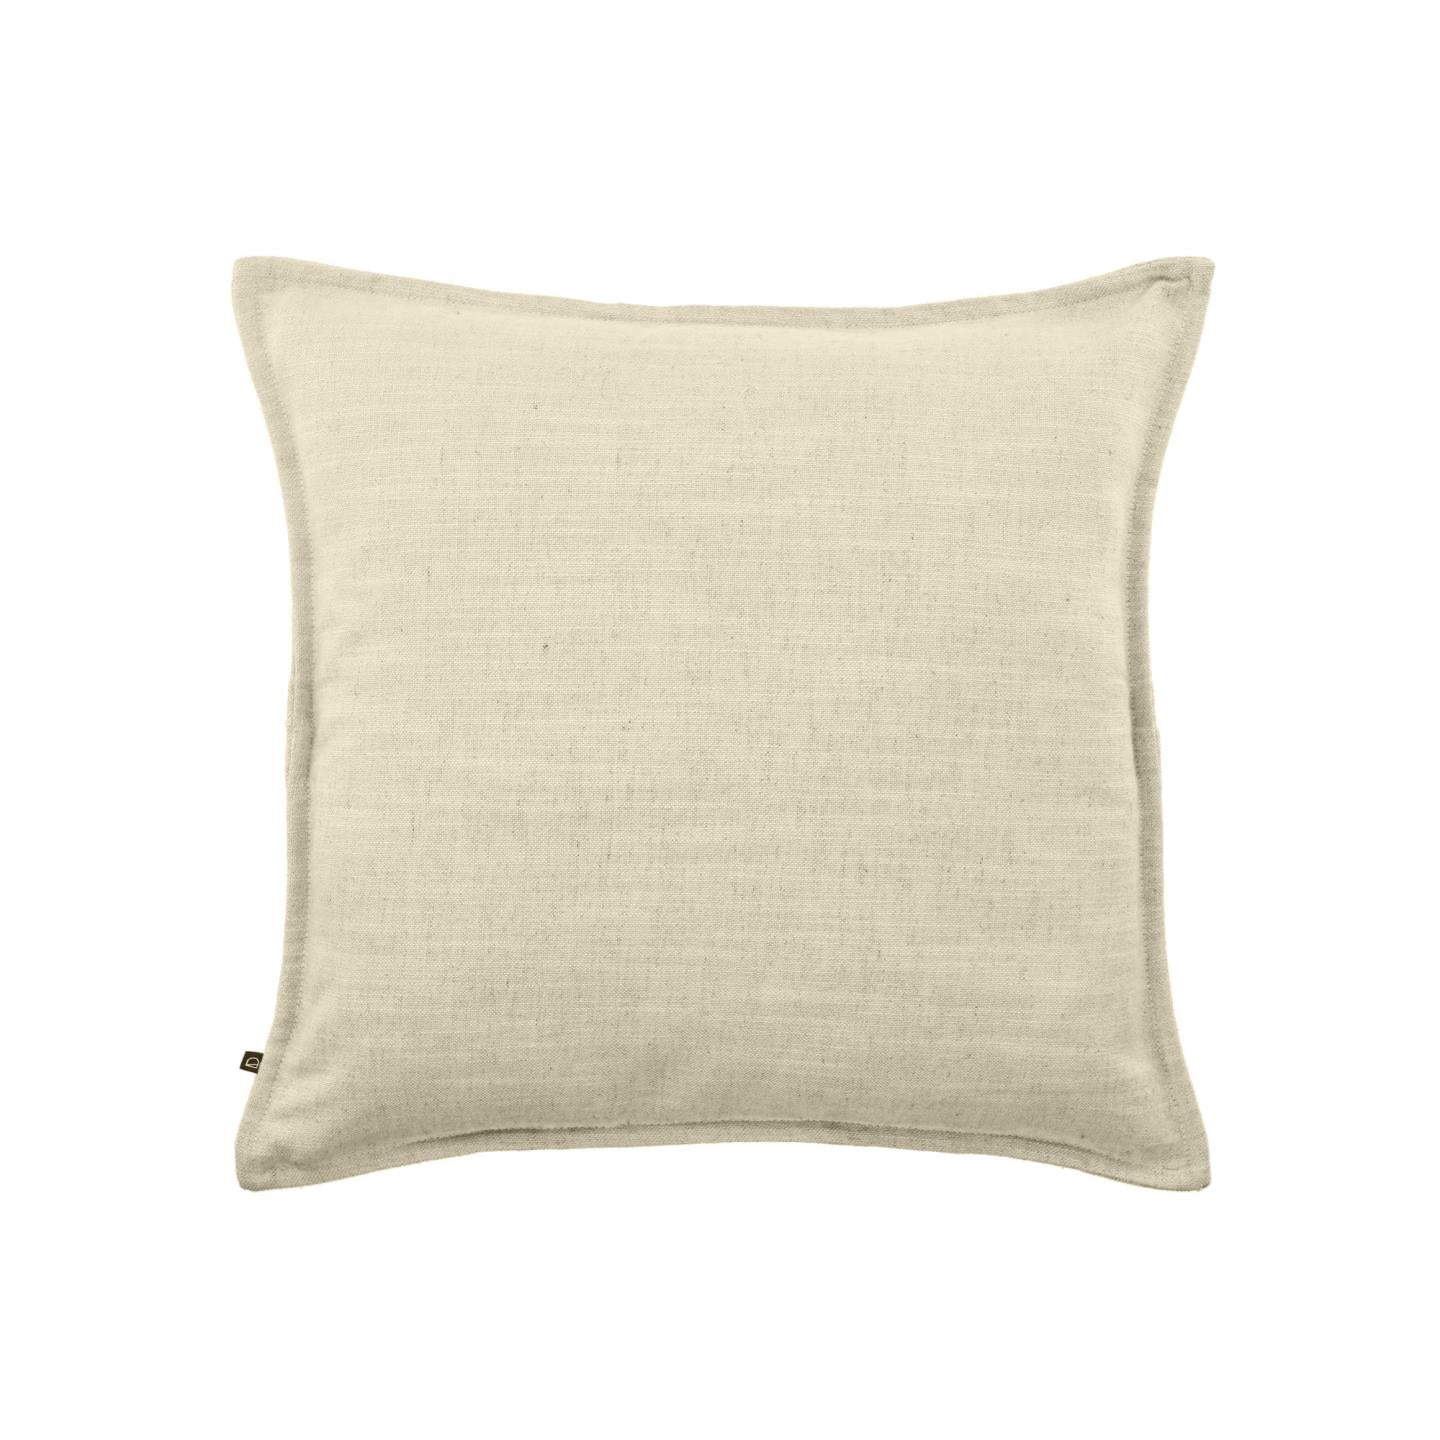 Blok cushion cover in white linen, 45 x 45 cm